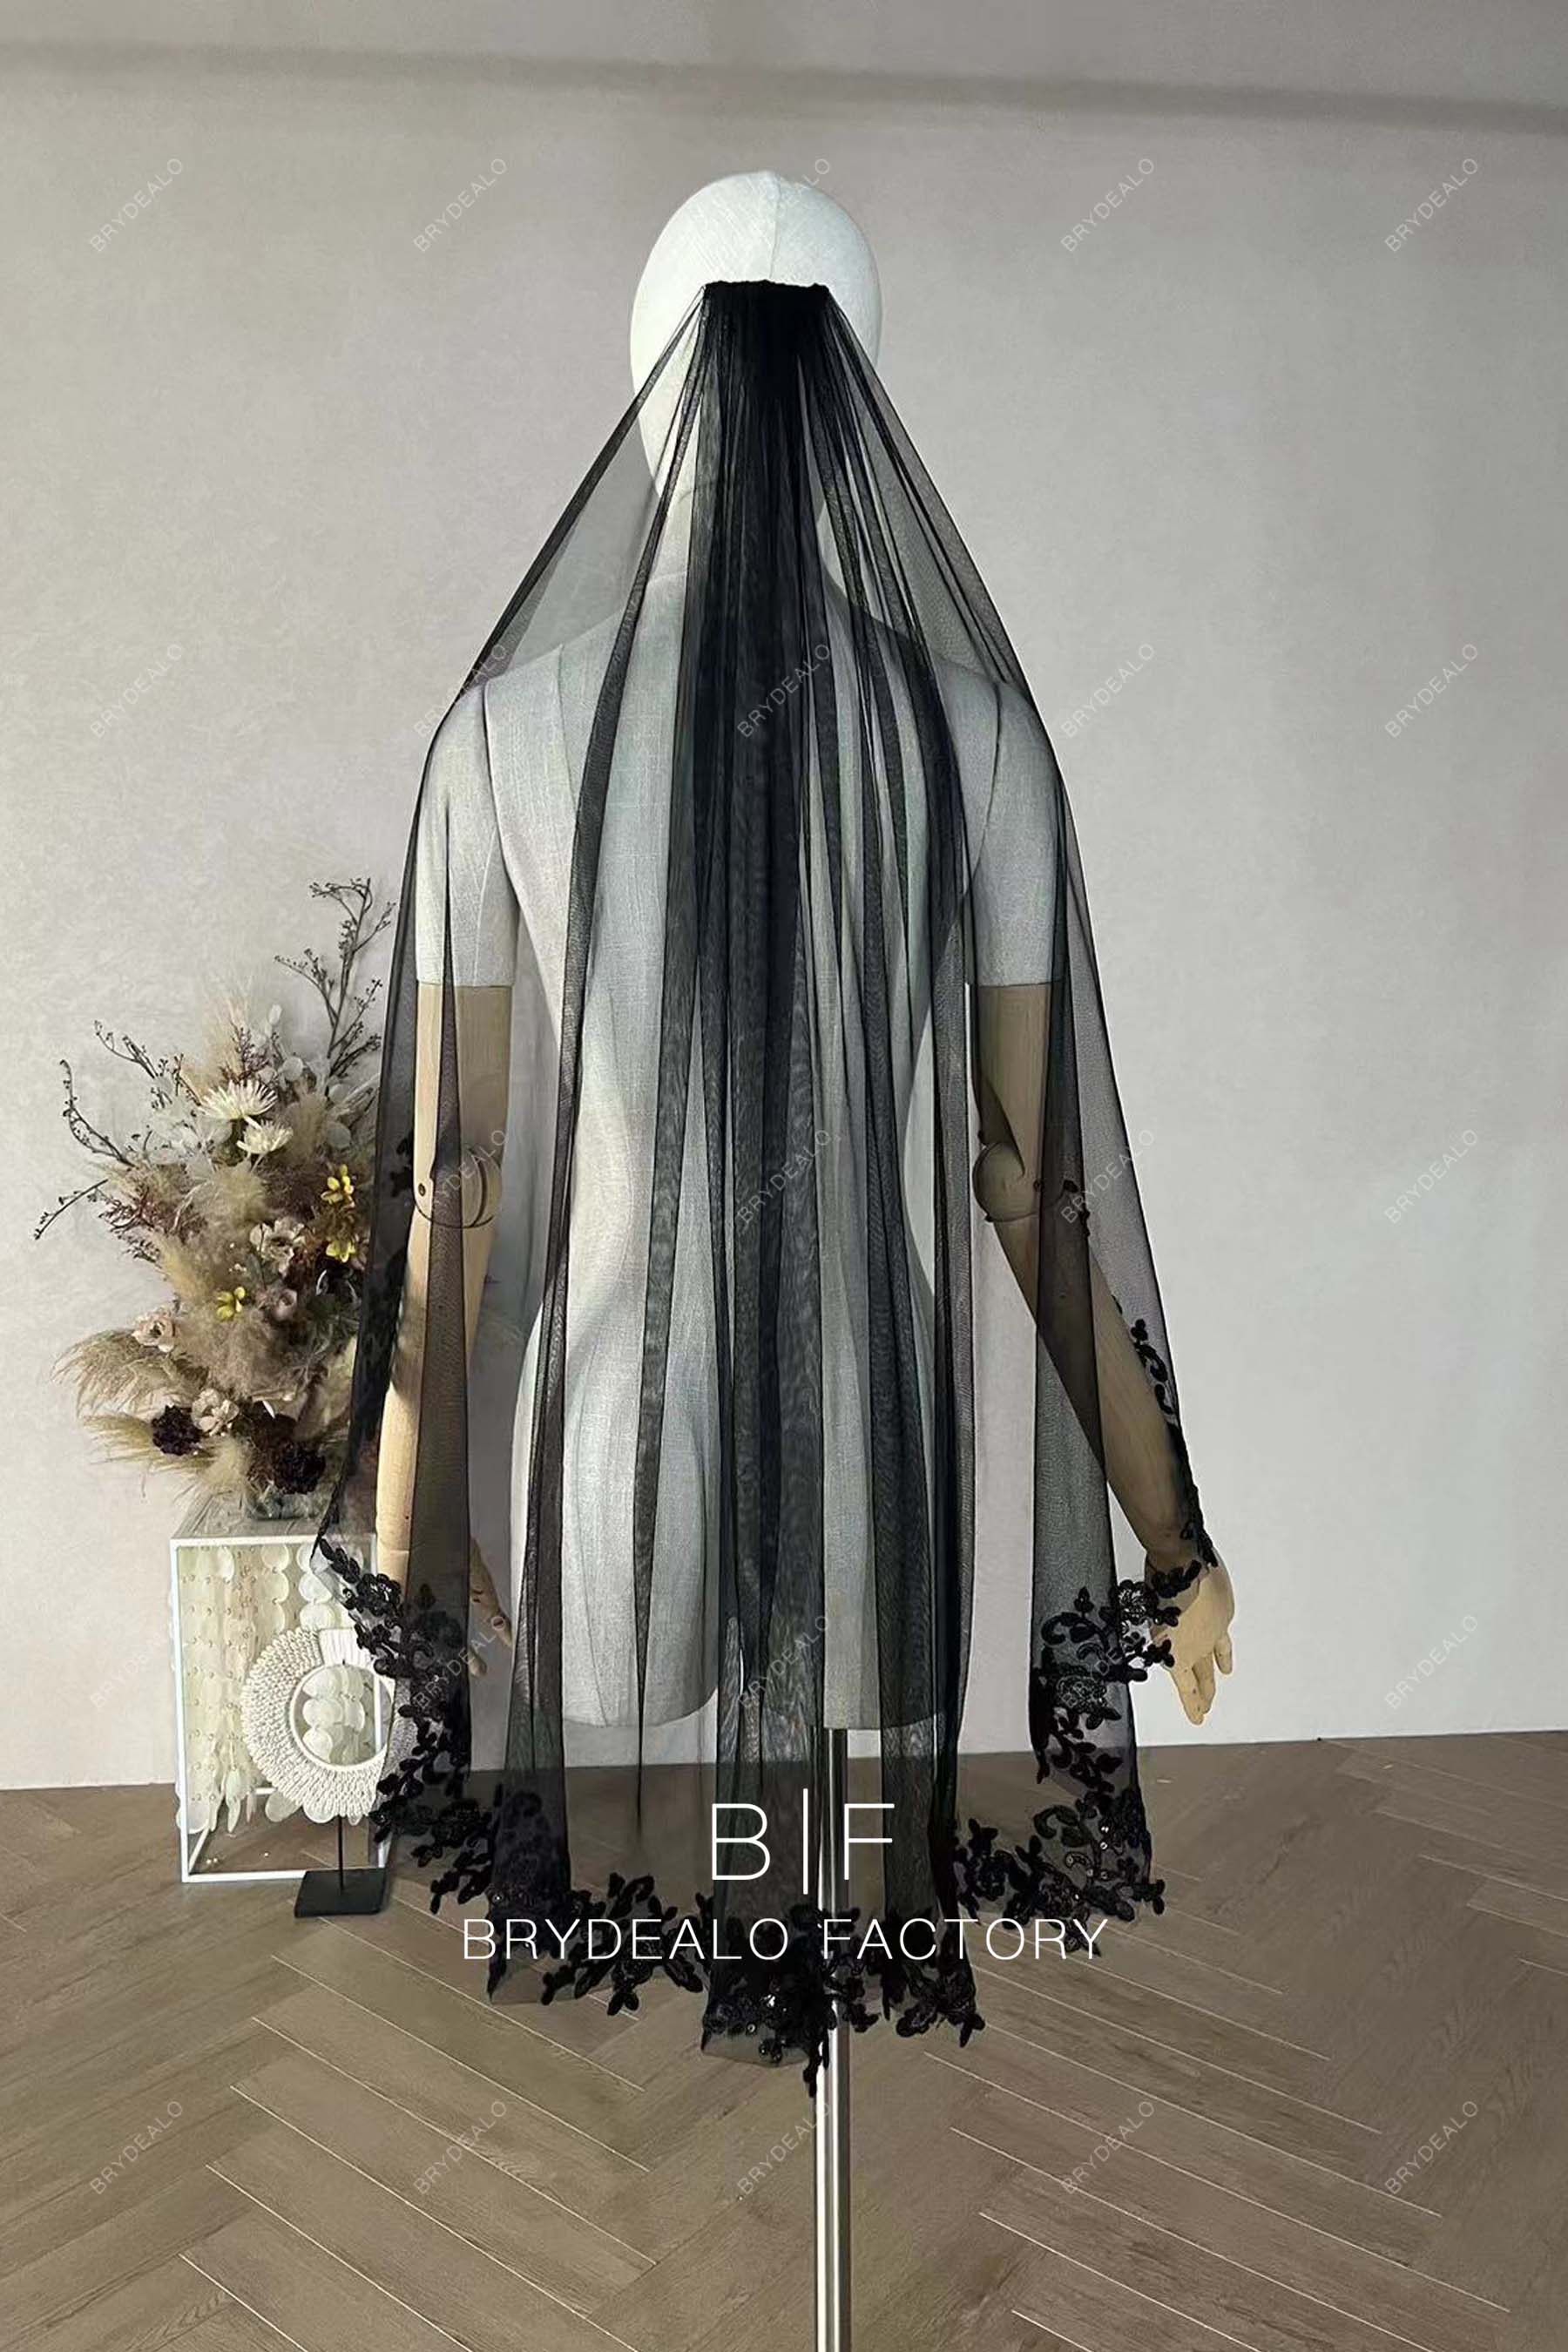 Private Label Black Sequin Tulle One Tier Bridal Veil BR20221221-05V